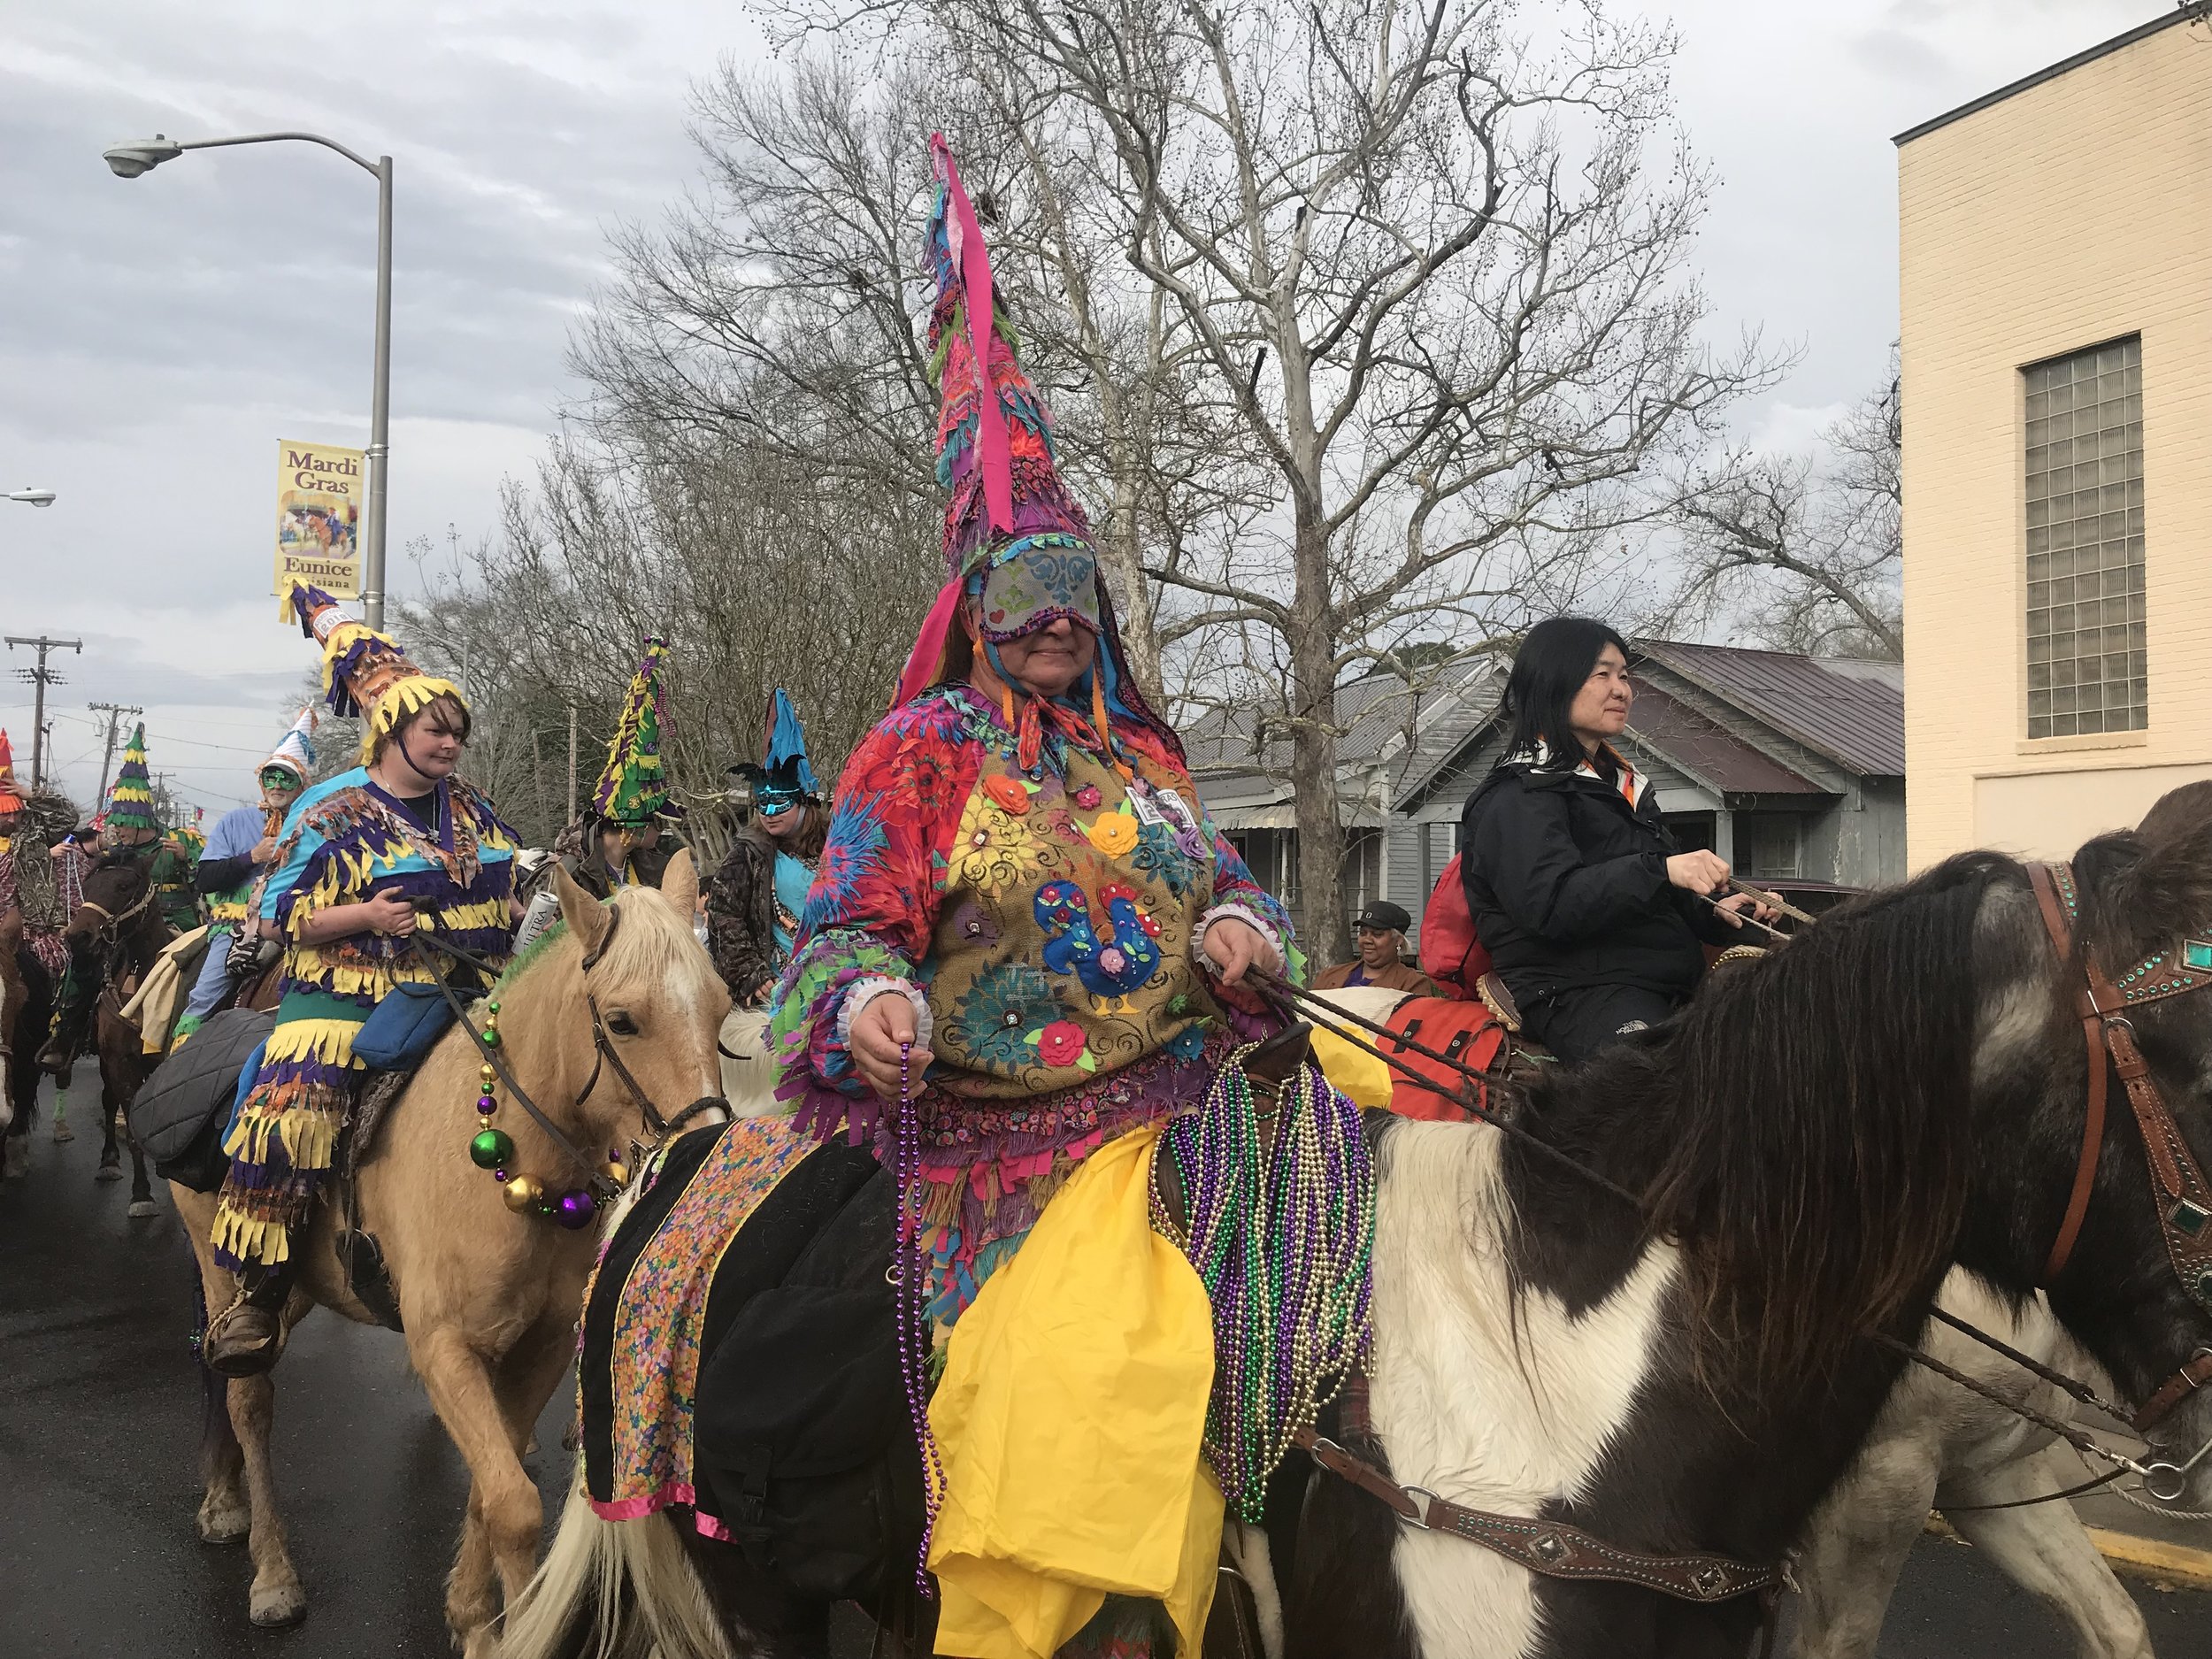  Homemade costumes in the Mardi Gras parade in Eunice, Louisiana. 